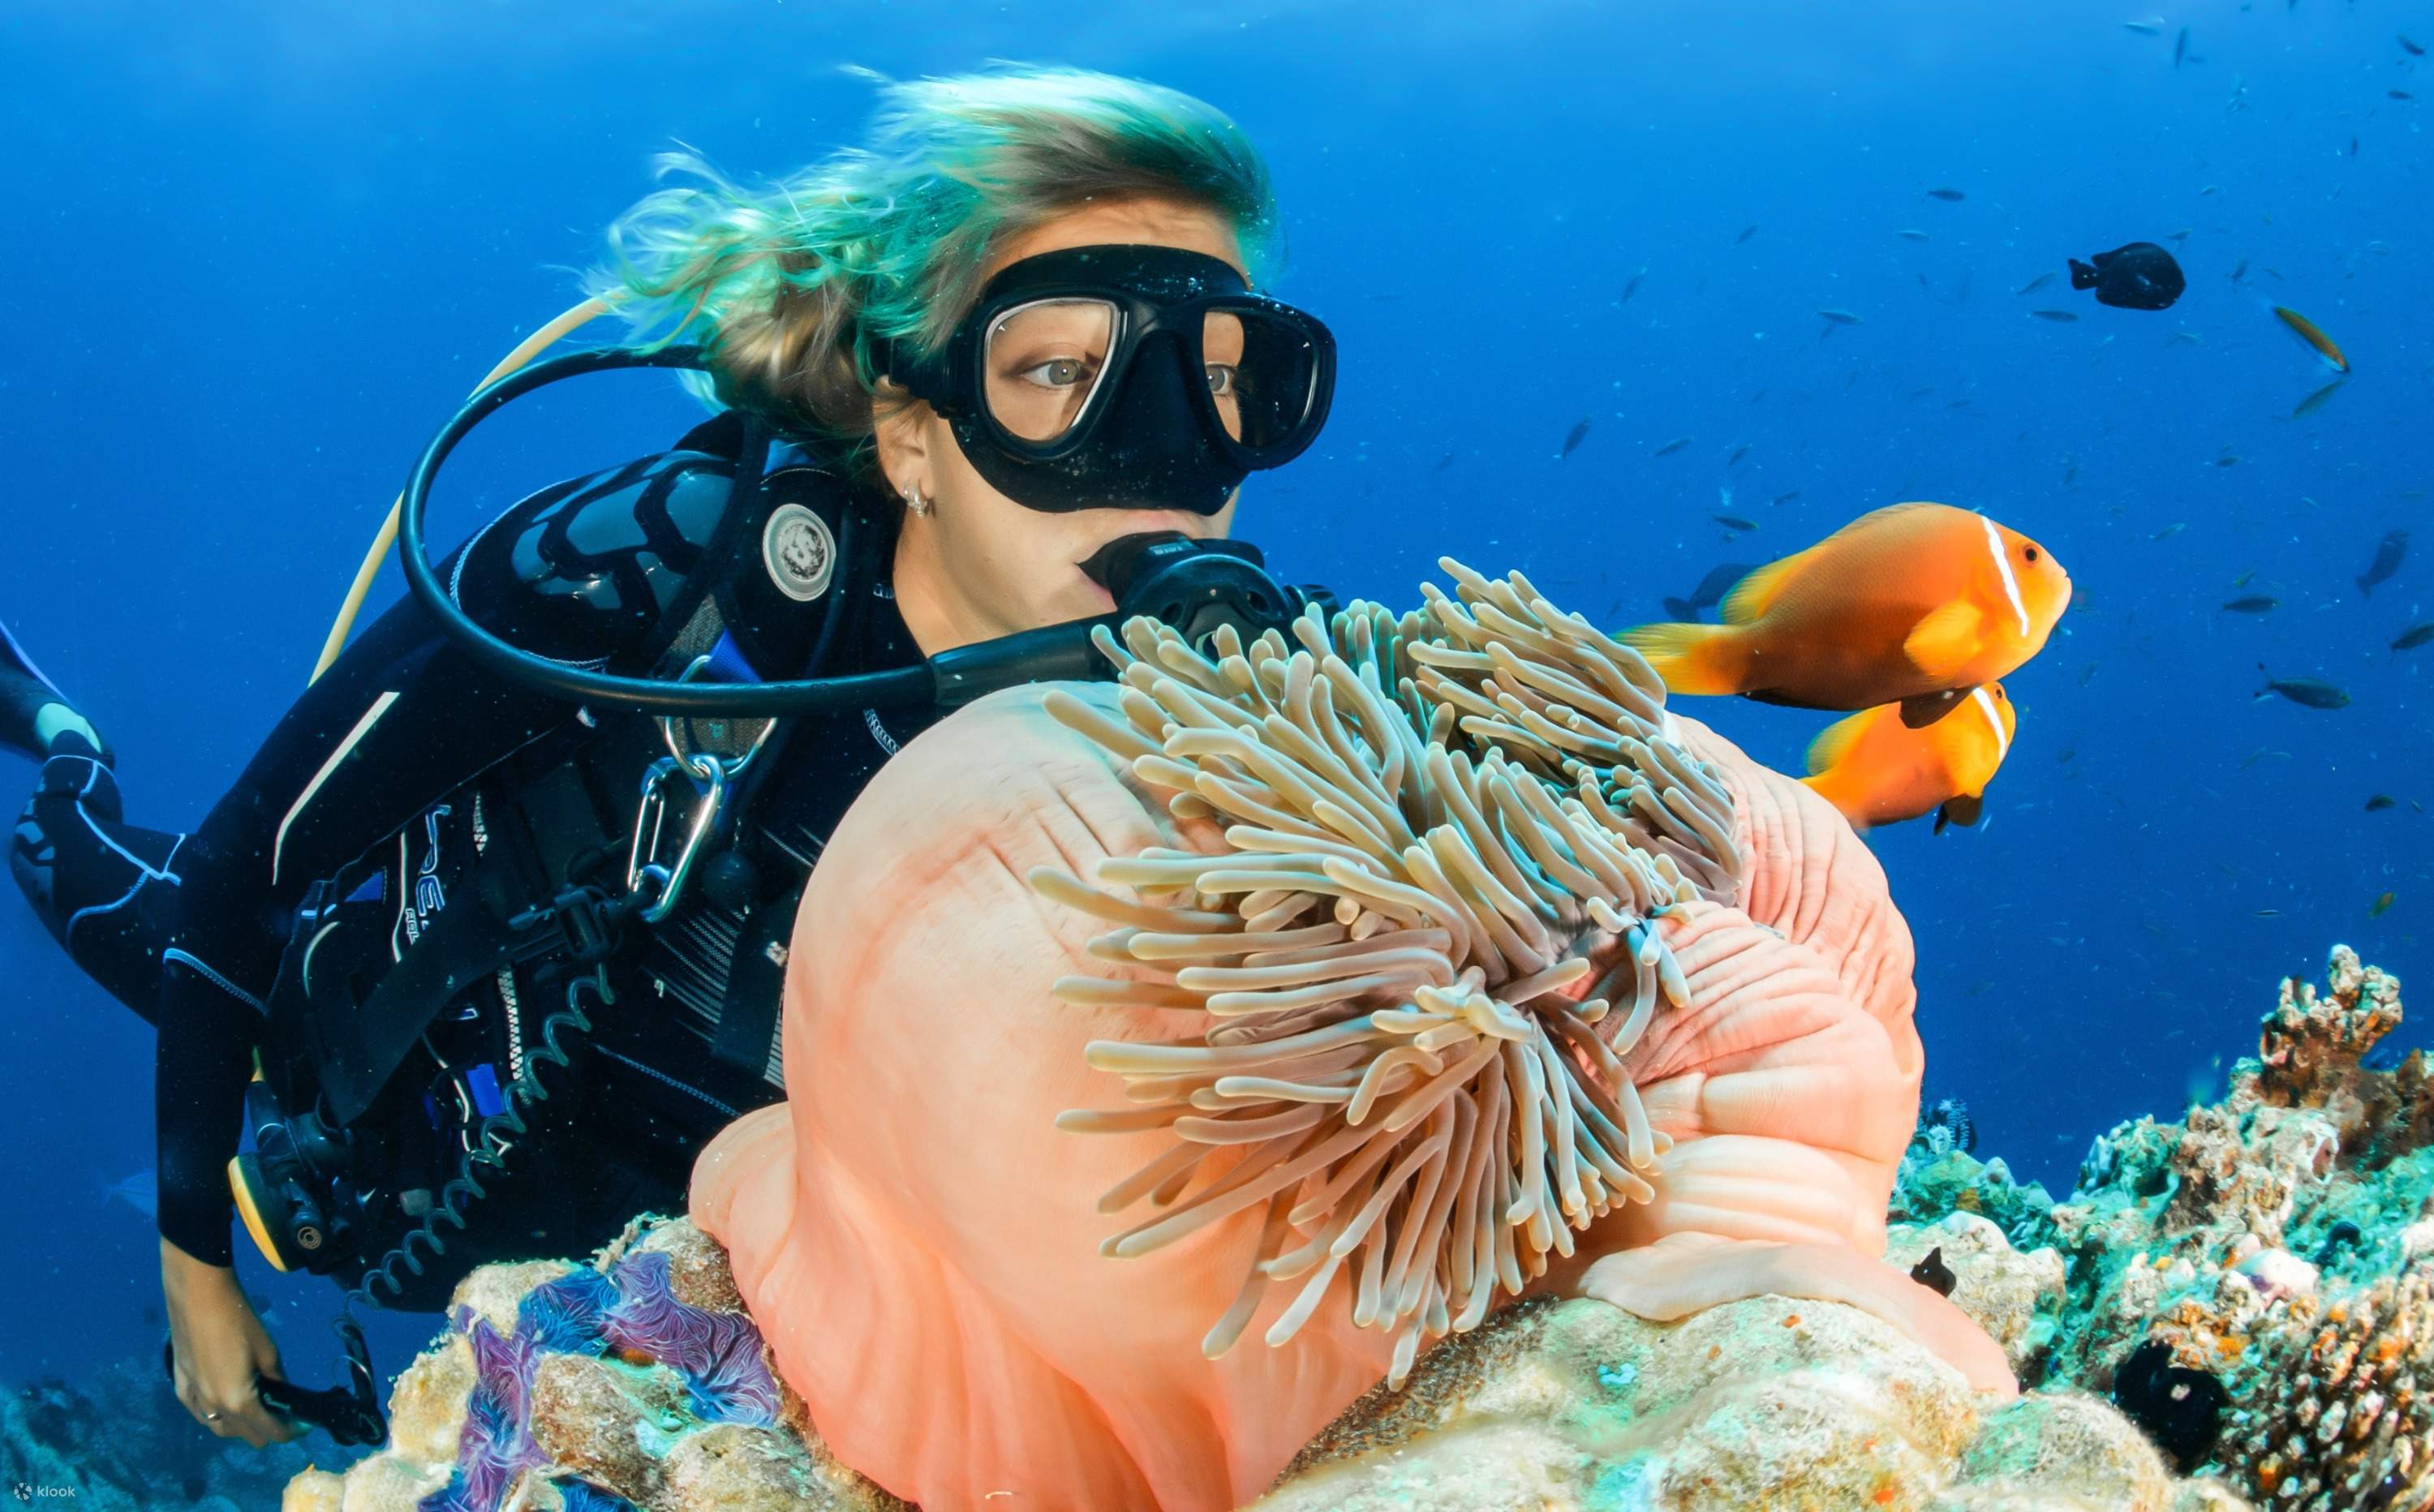 Bali Beginner Scuba Diving Experience, Indonesia - Klook Canada